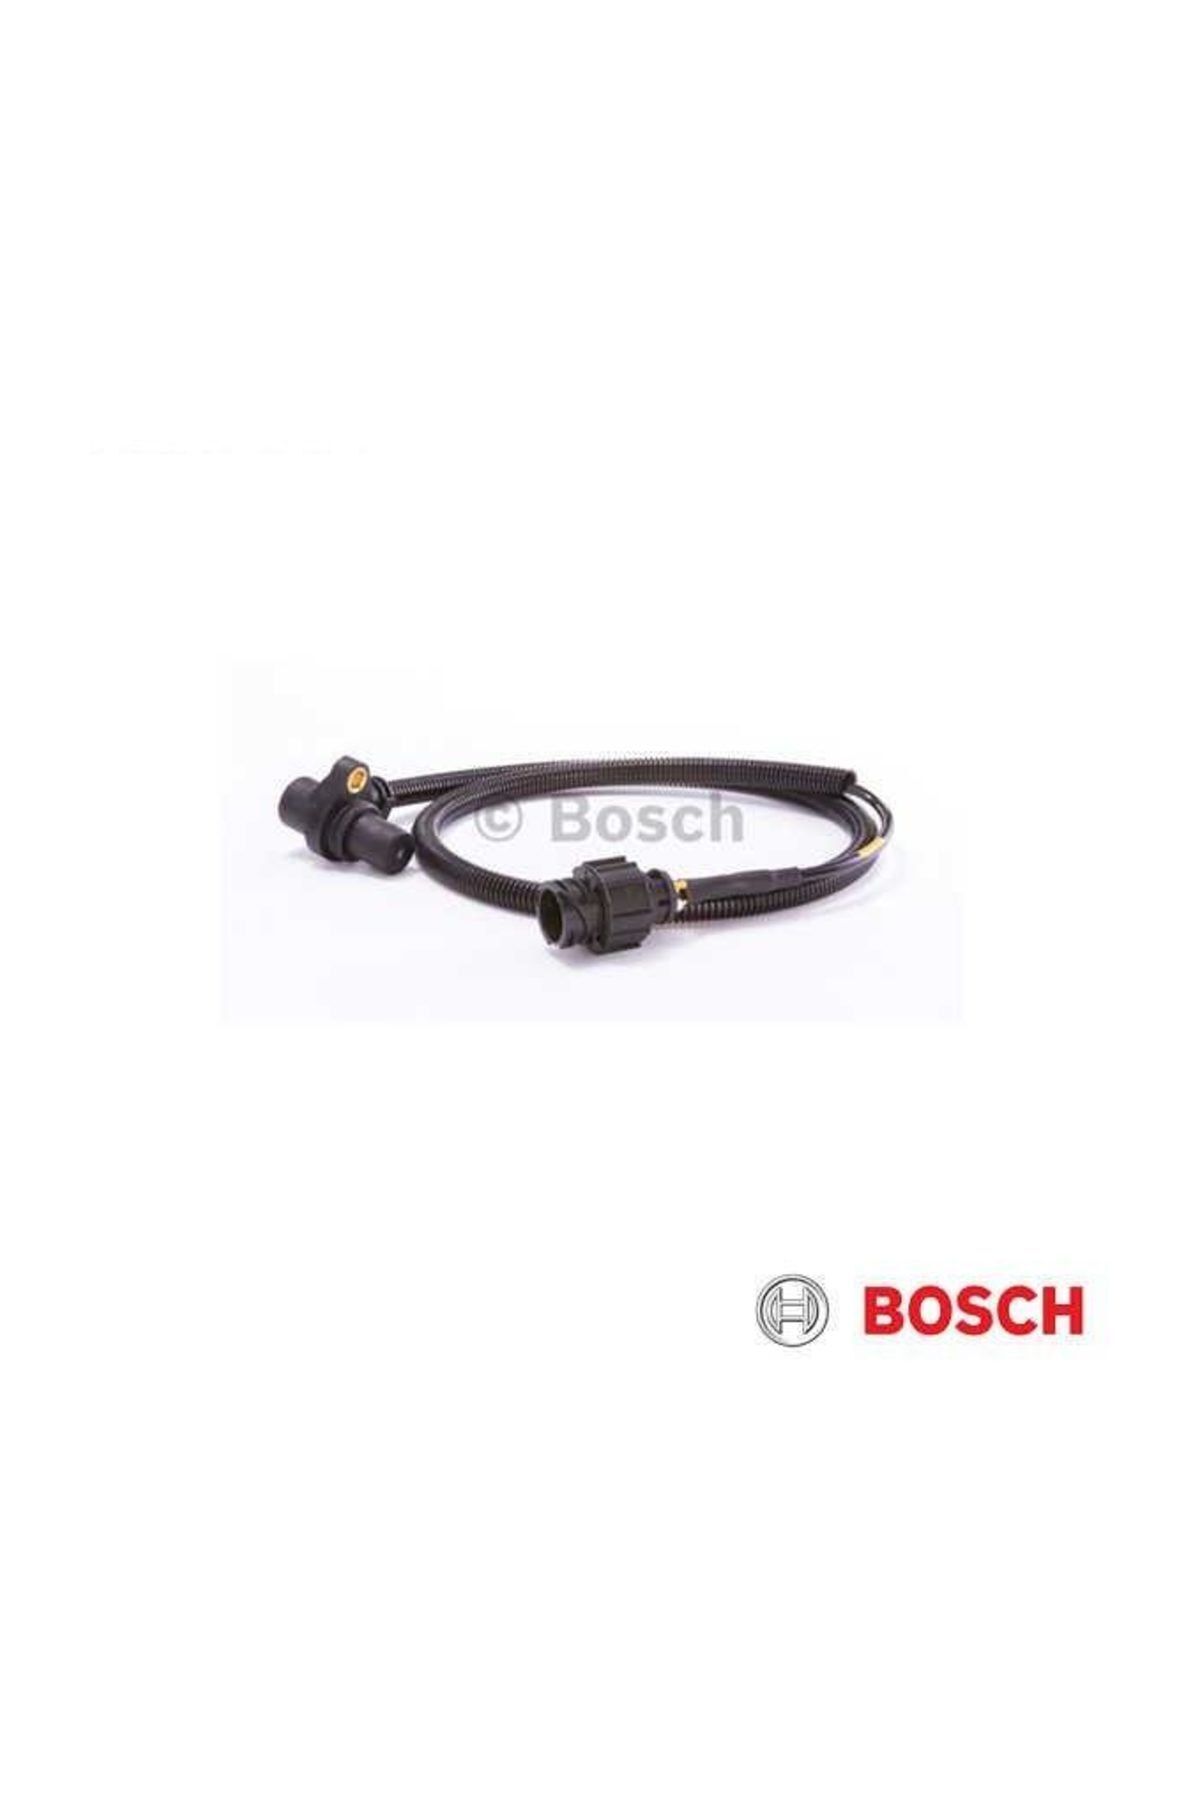 Bosch 0281002458 - 0 281 002 458 Volvo Bosch Volan Sensörüfh-Fm Kablolu